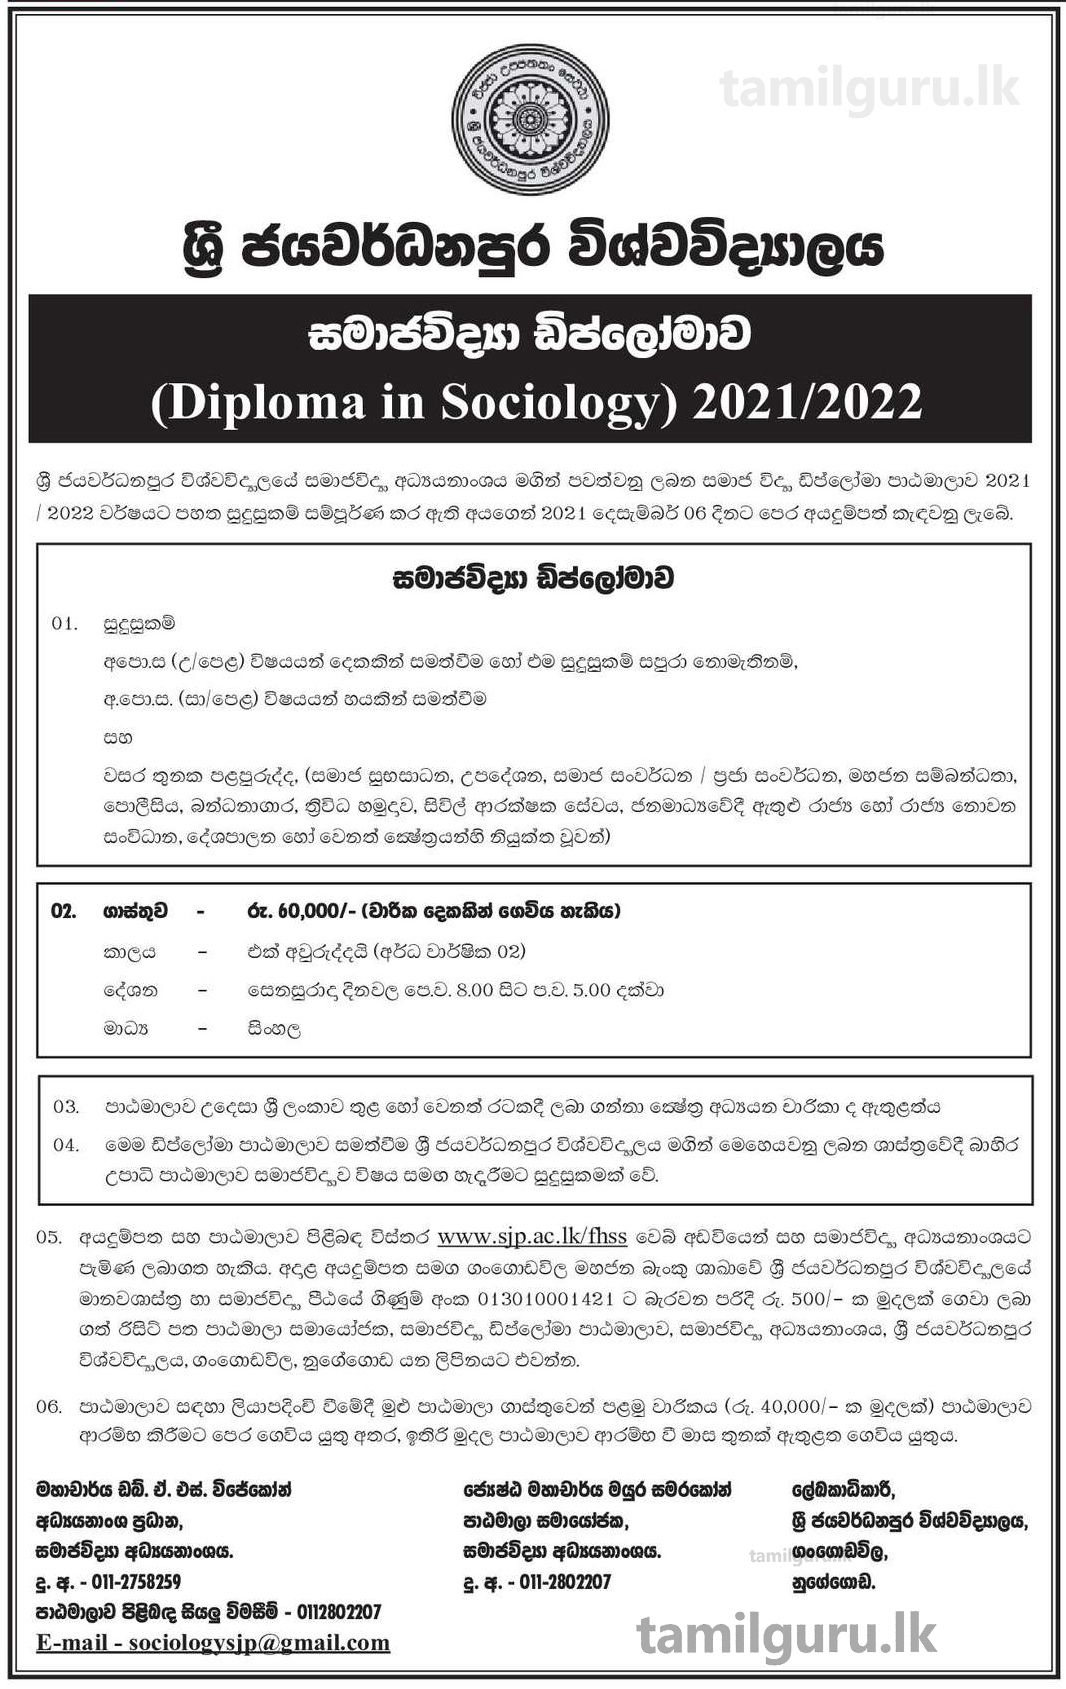 Diploma in Sociology 2021/2022 - University of Sri Jayewardenepura සමාජවිද්‍යා ඩිප්ලෝමා පාඨමාලාව - ශ්‍රී ජයවර්ධනපුර විශ්වවිද්‍යාලය